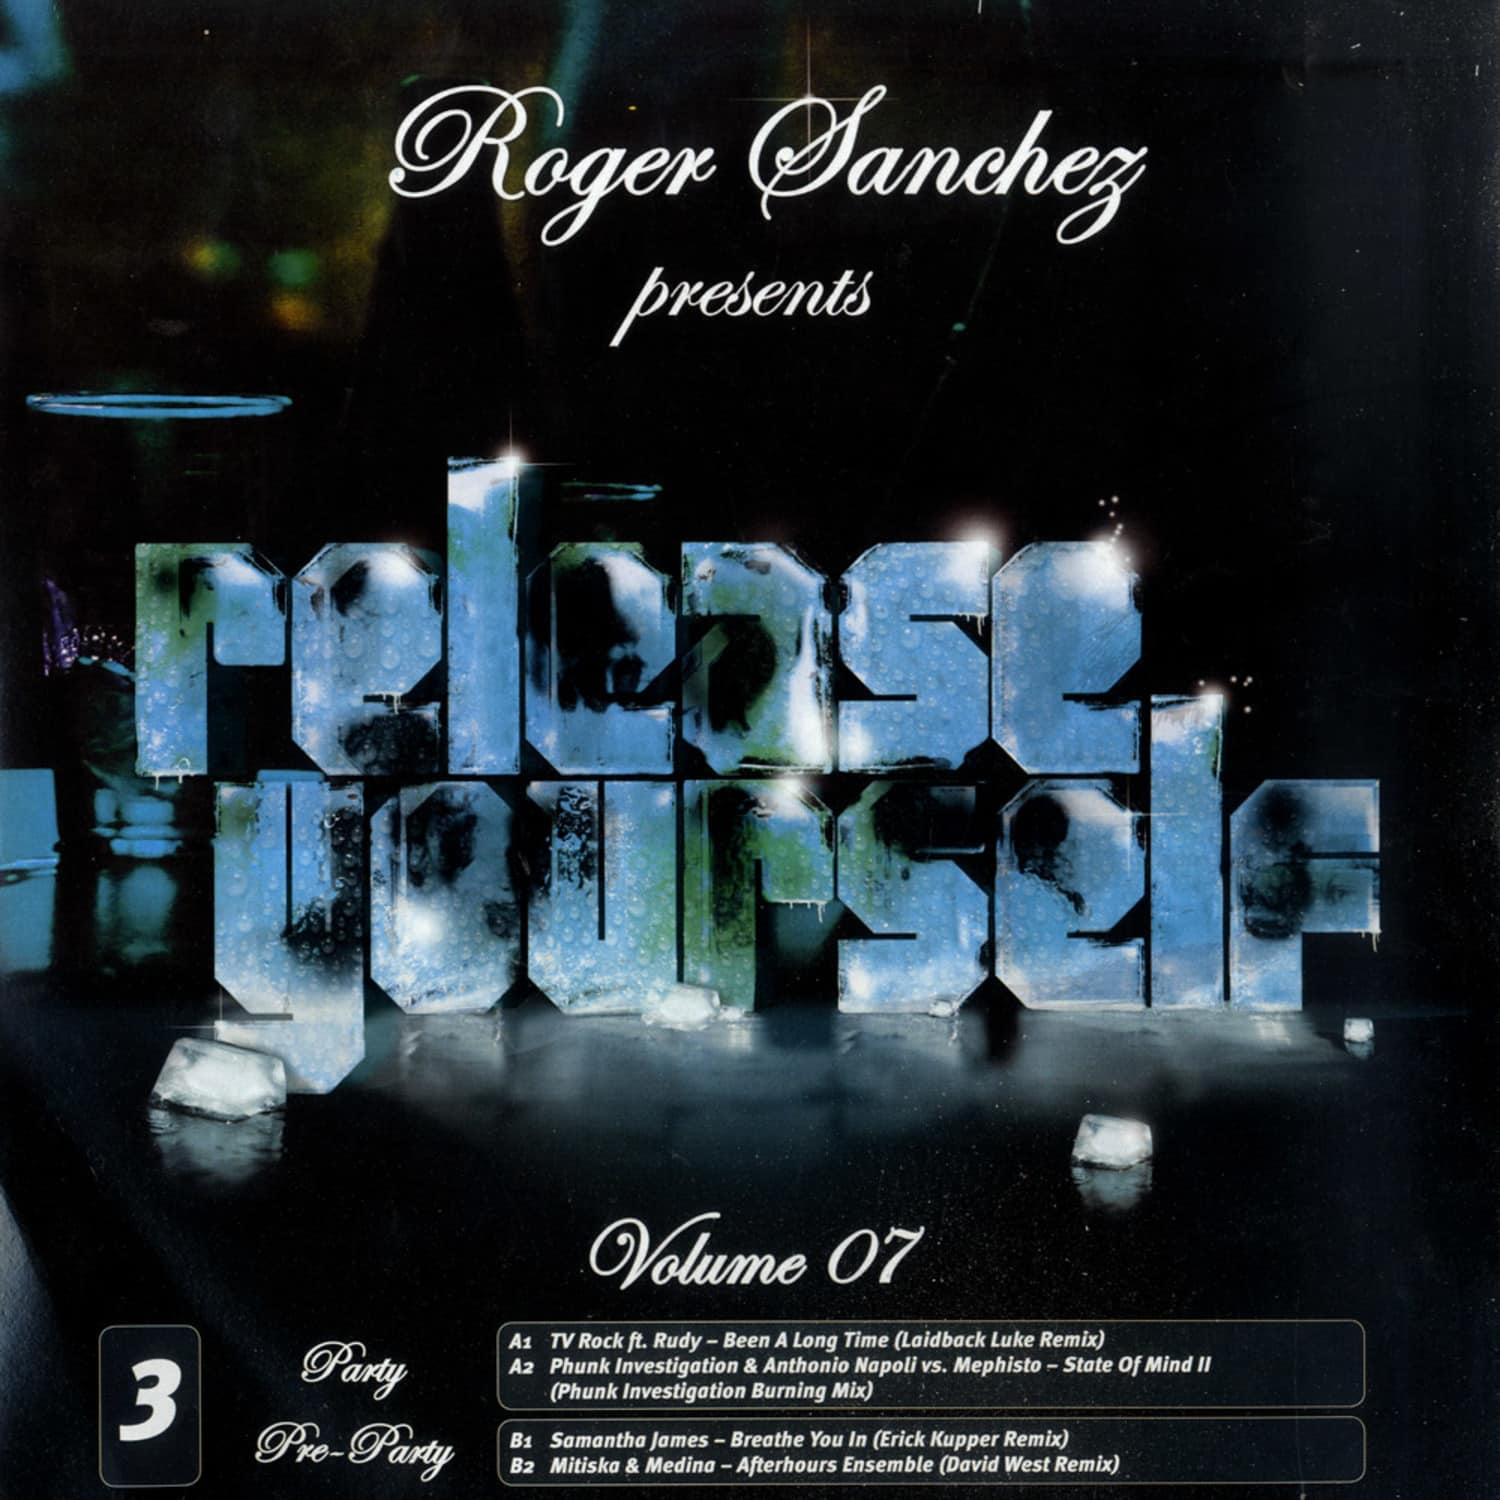 Roger Sanchez - RELEASE YOURSELF - VOL. 7 EP3